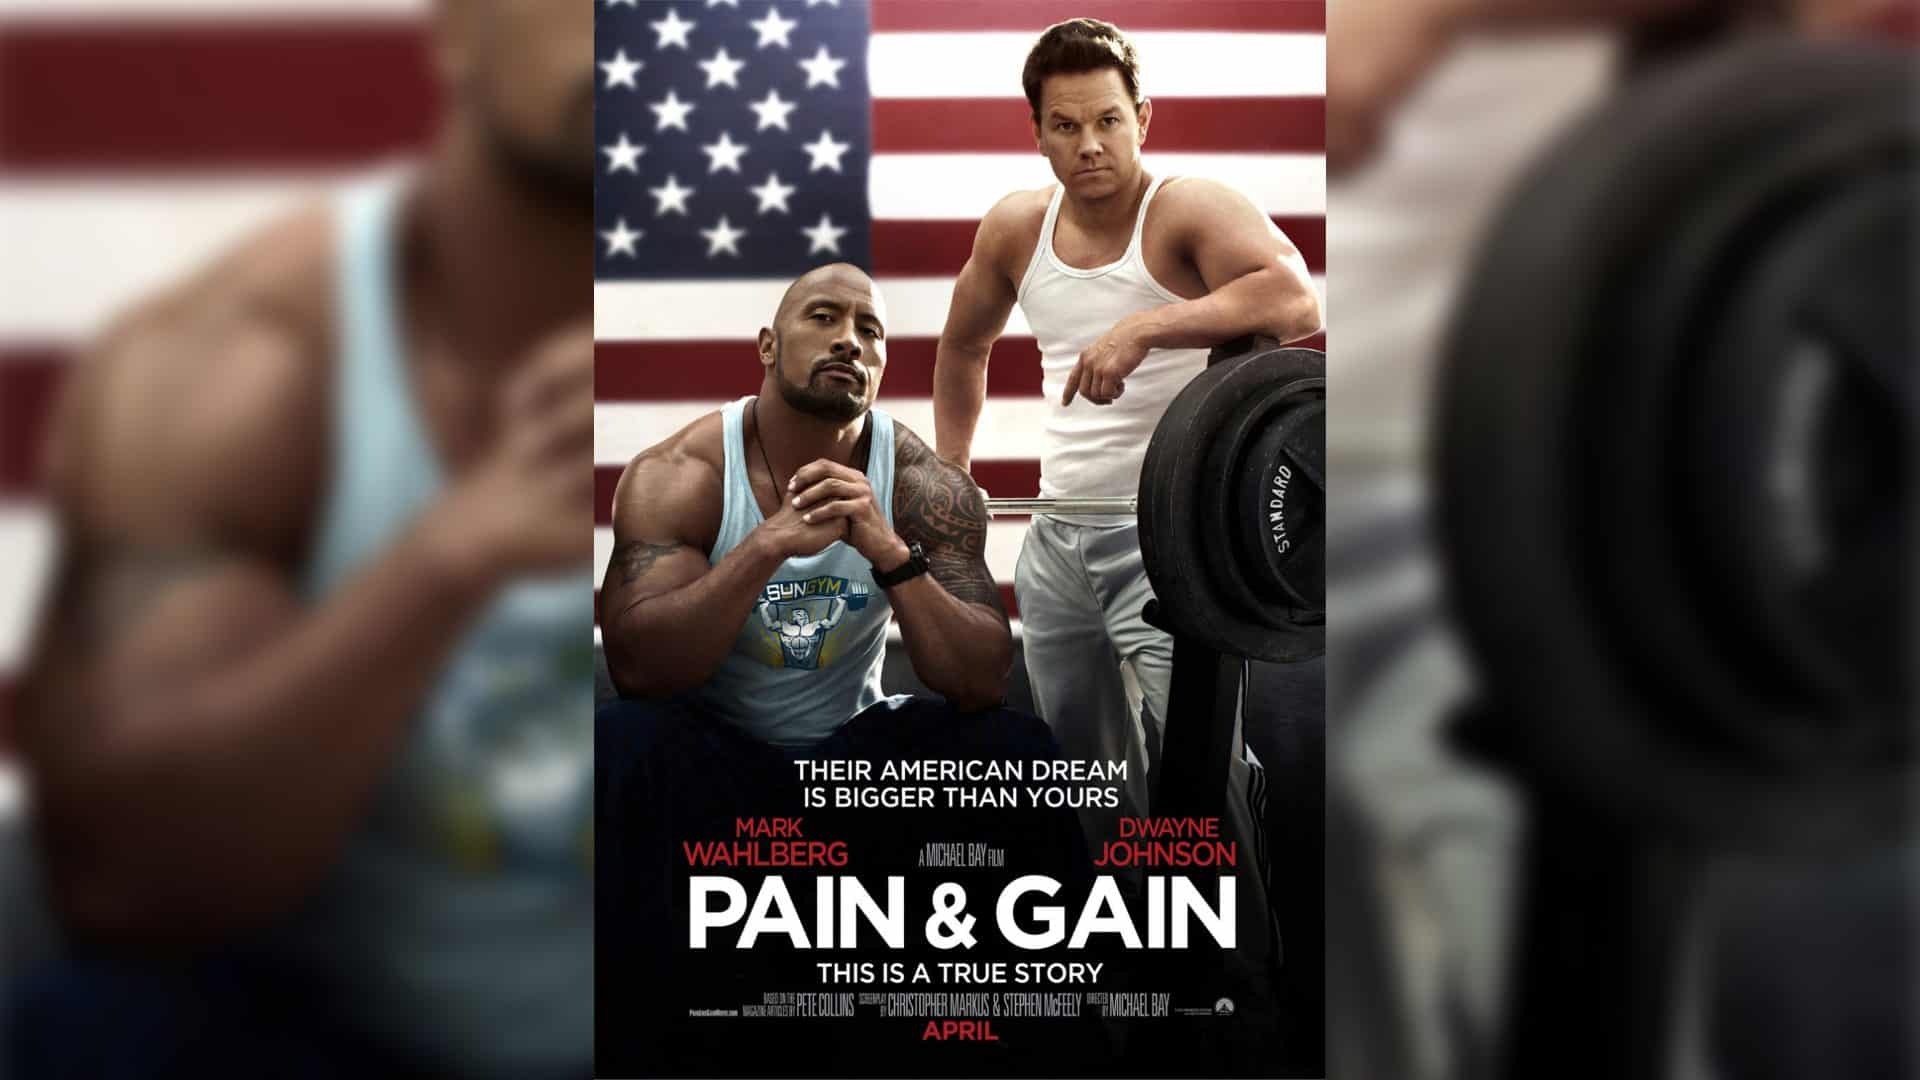 Pain & Gain (2013) Google Drive Download Bluray HD